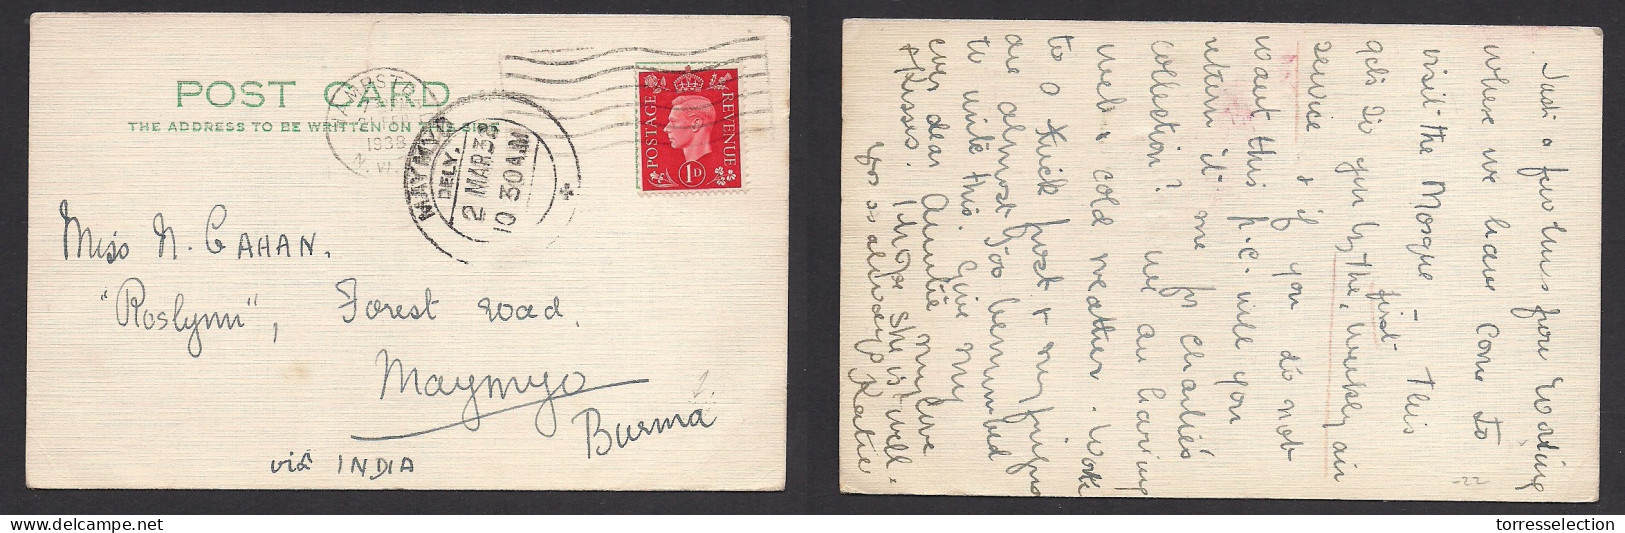 Great Britain - XX. 1938 (21 Febr) Hampstead - Burma, MayMyo (2 March) Via India. 1d Red Private Comercial Fkd Card. XSA - ...-1840 Vorläufer